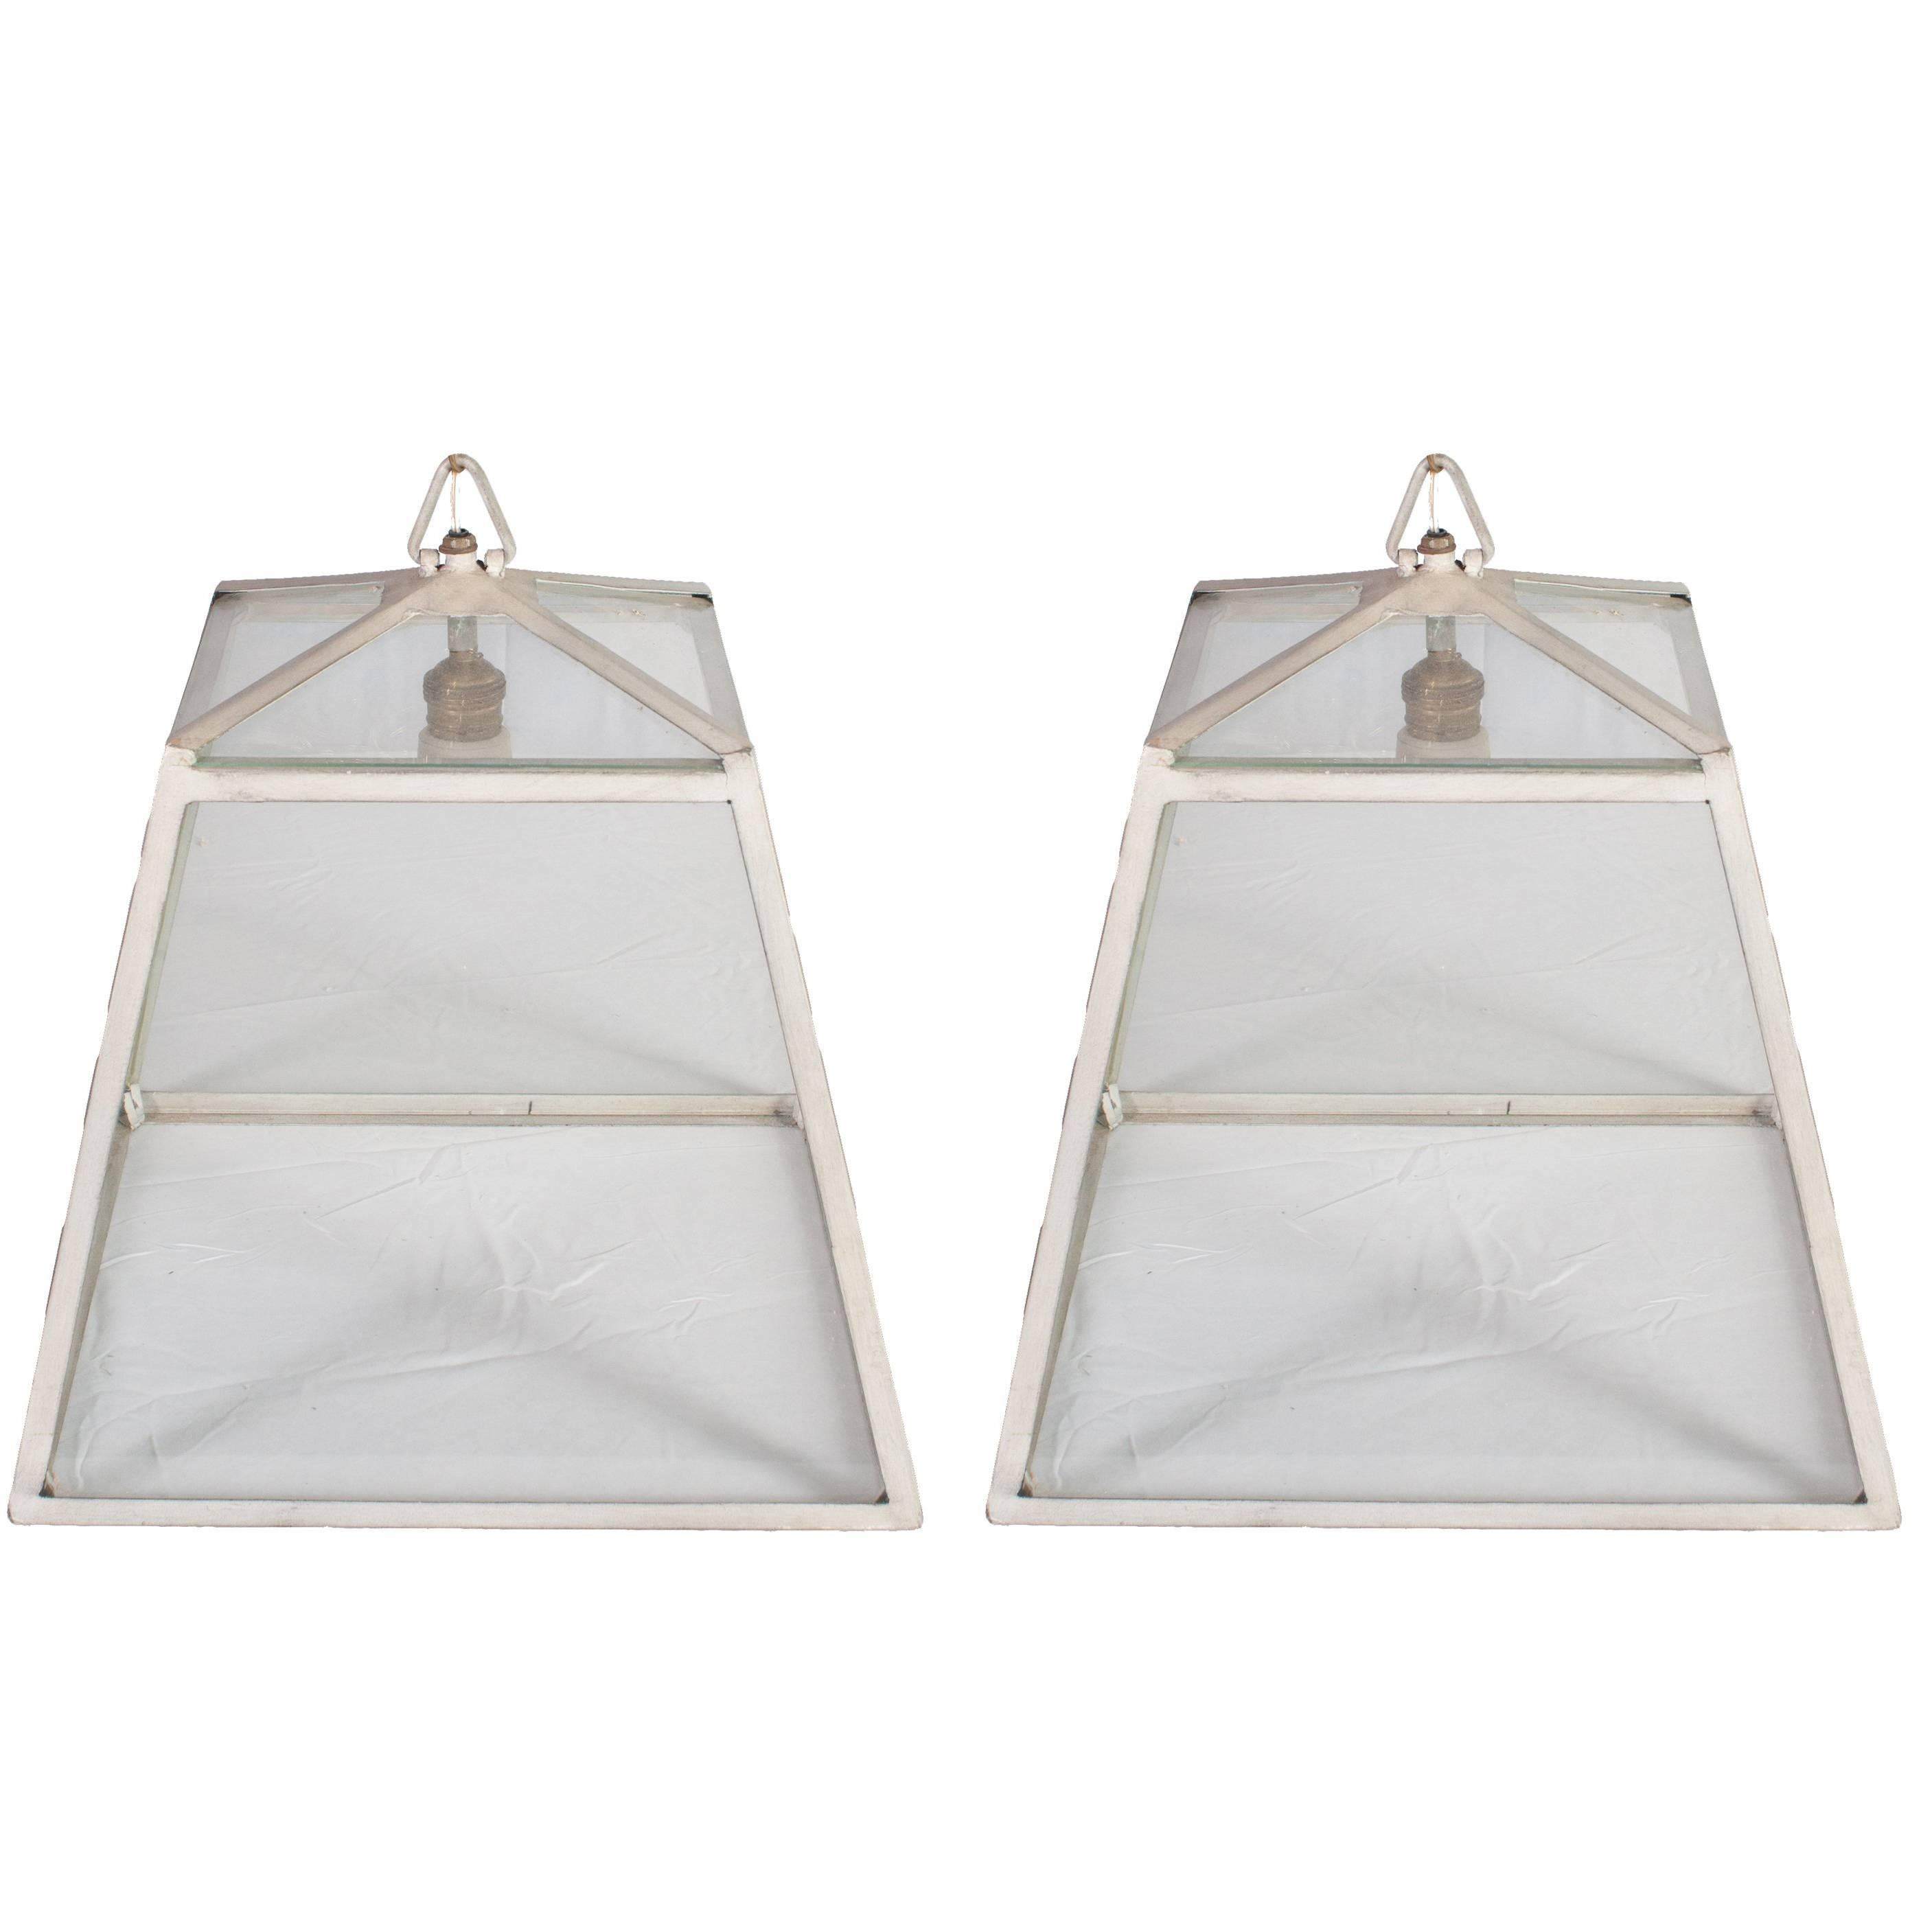 Trapezoidal Glass and Metal Frame Herve Baume Lanterns